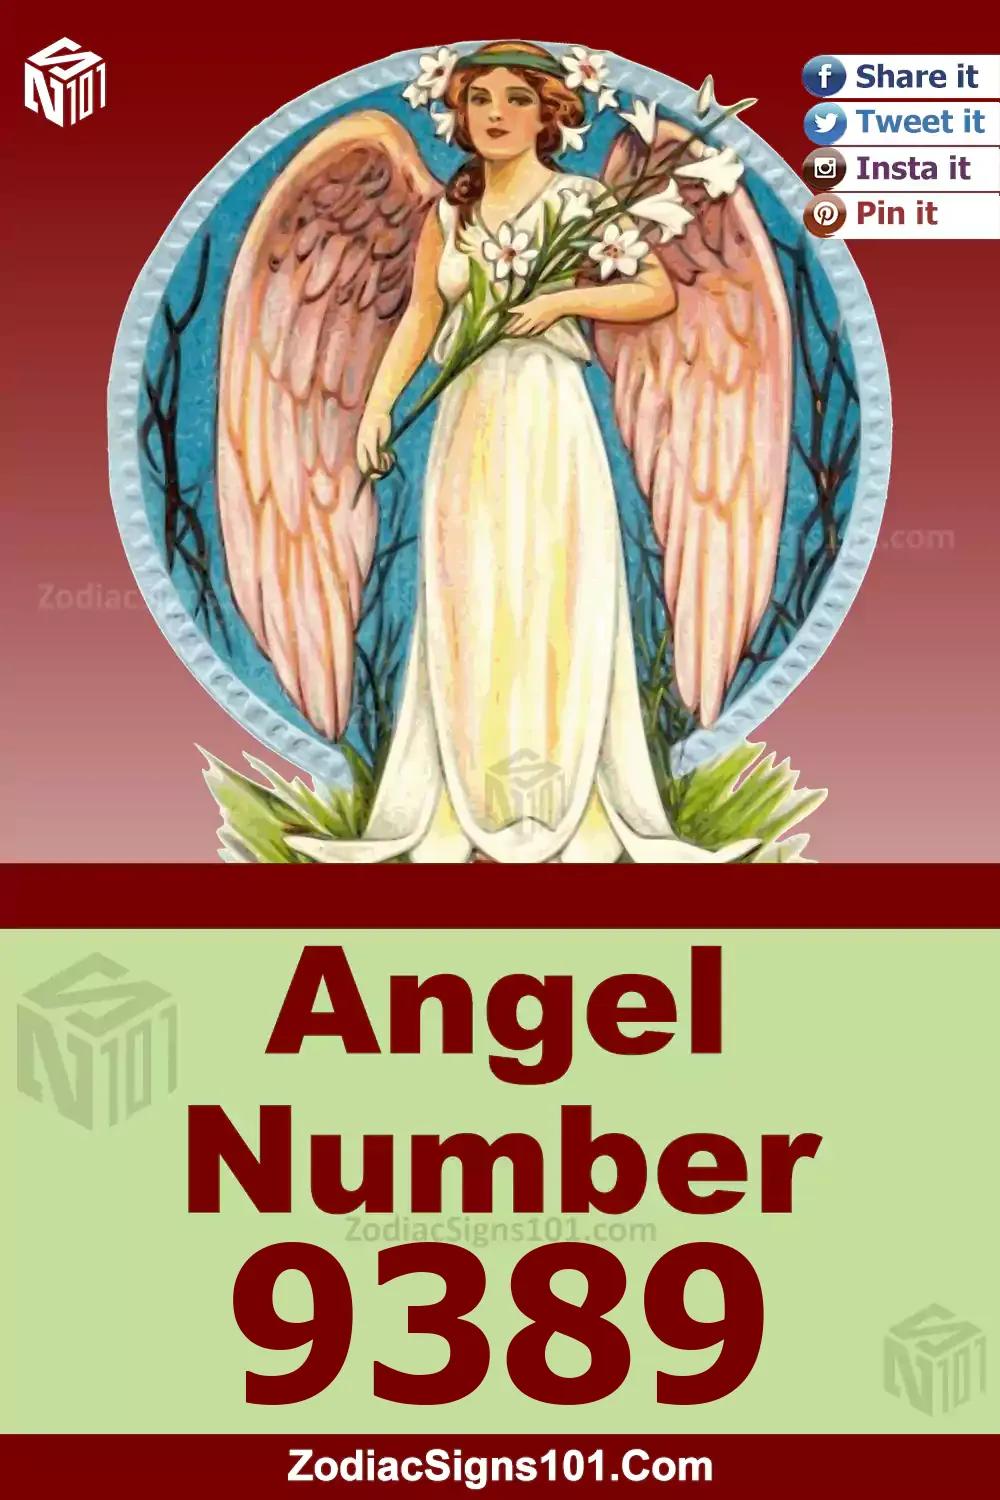 9389-Angel-Number-Meaning.jpg